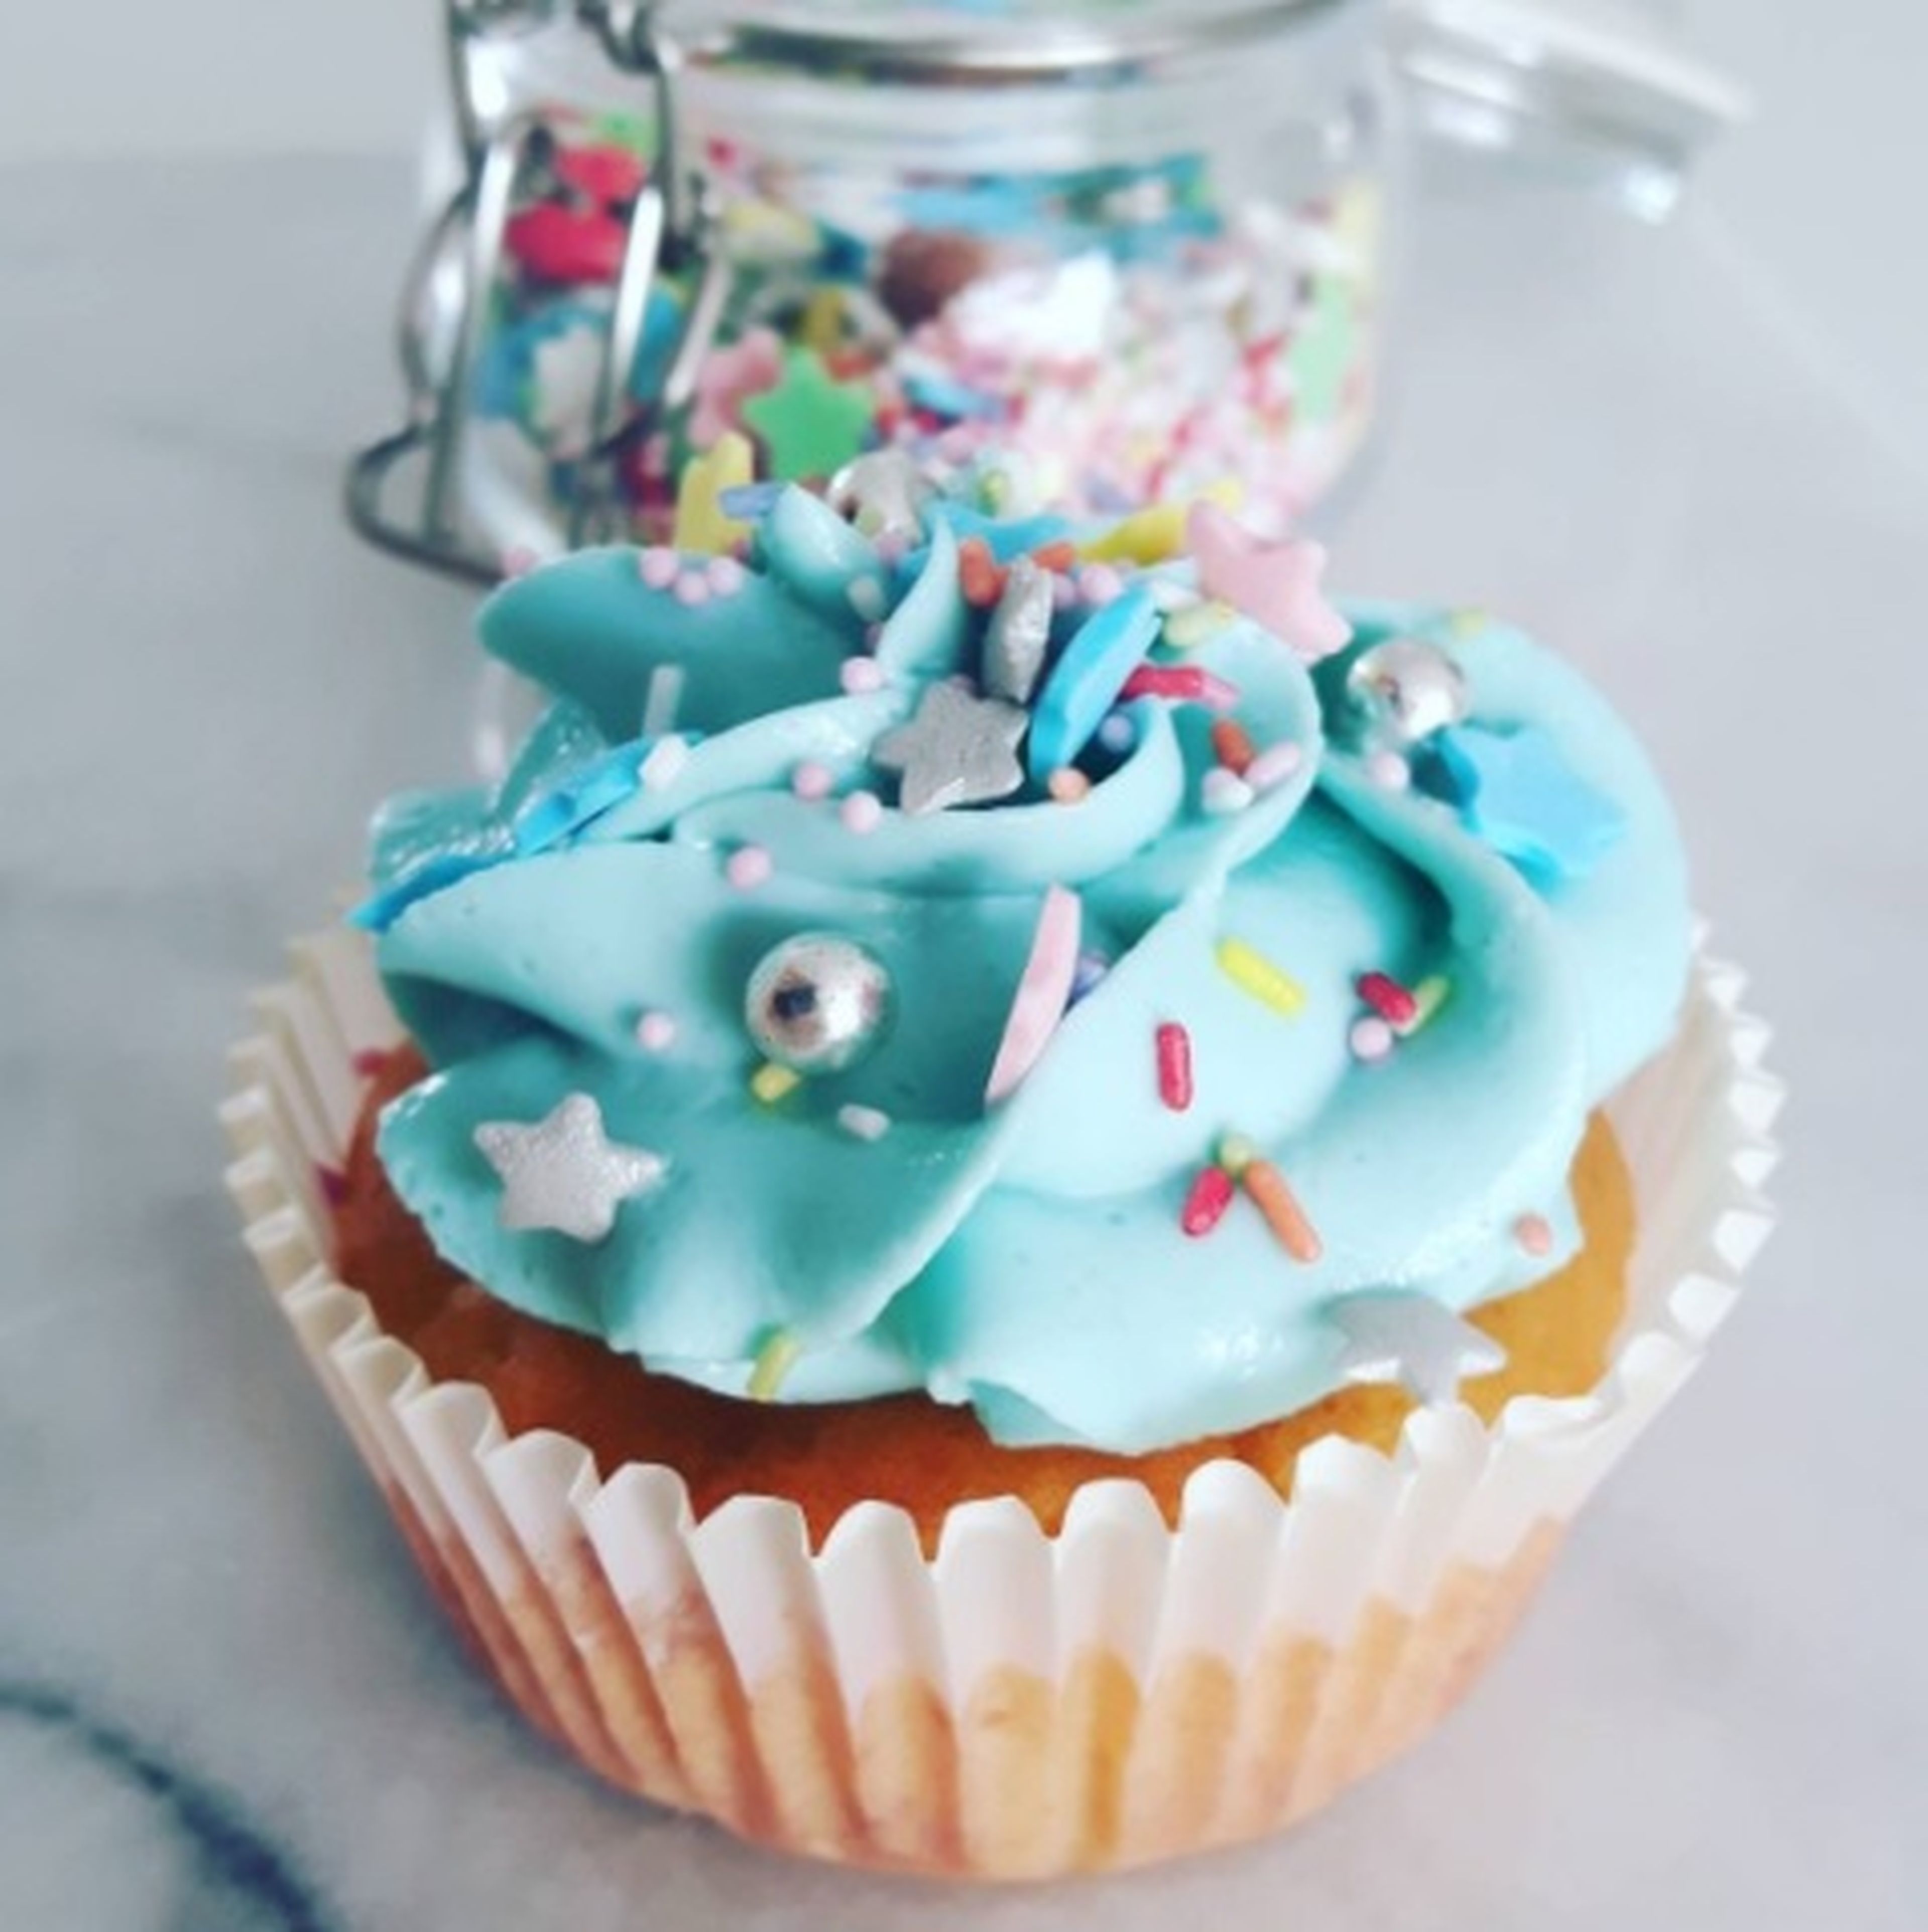 Vanilla cupcake with sprinkles